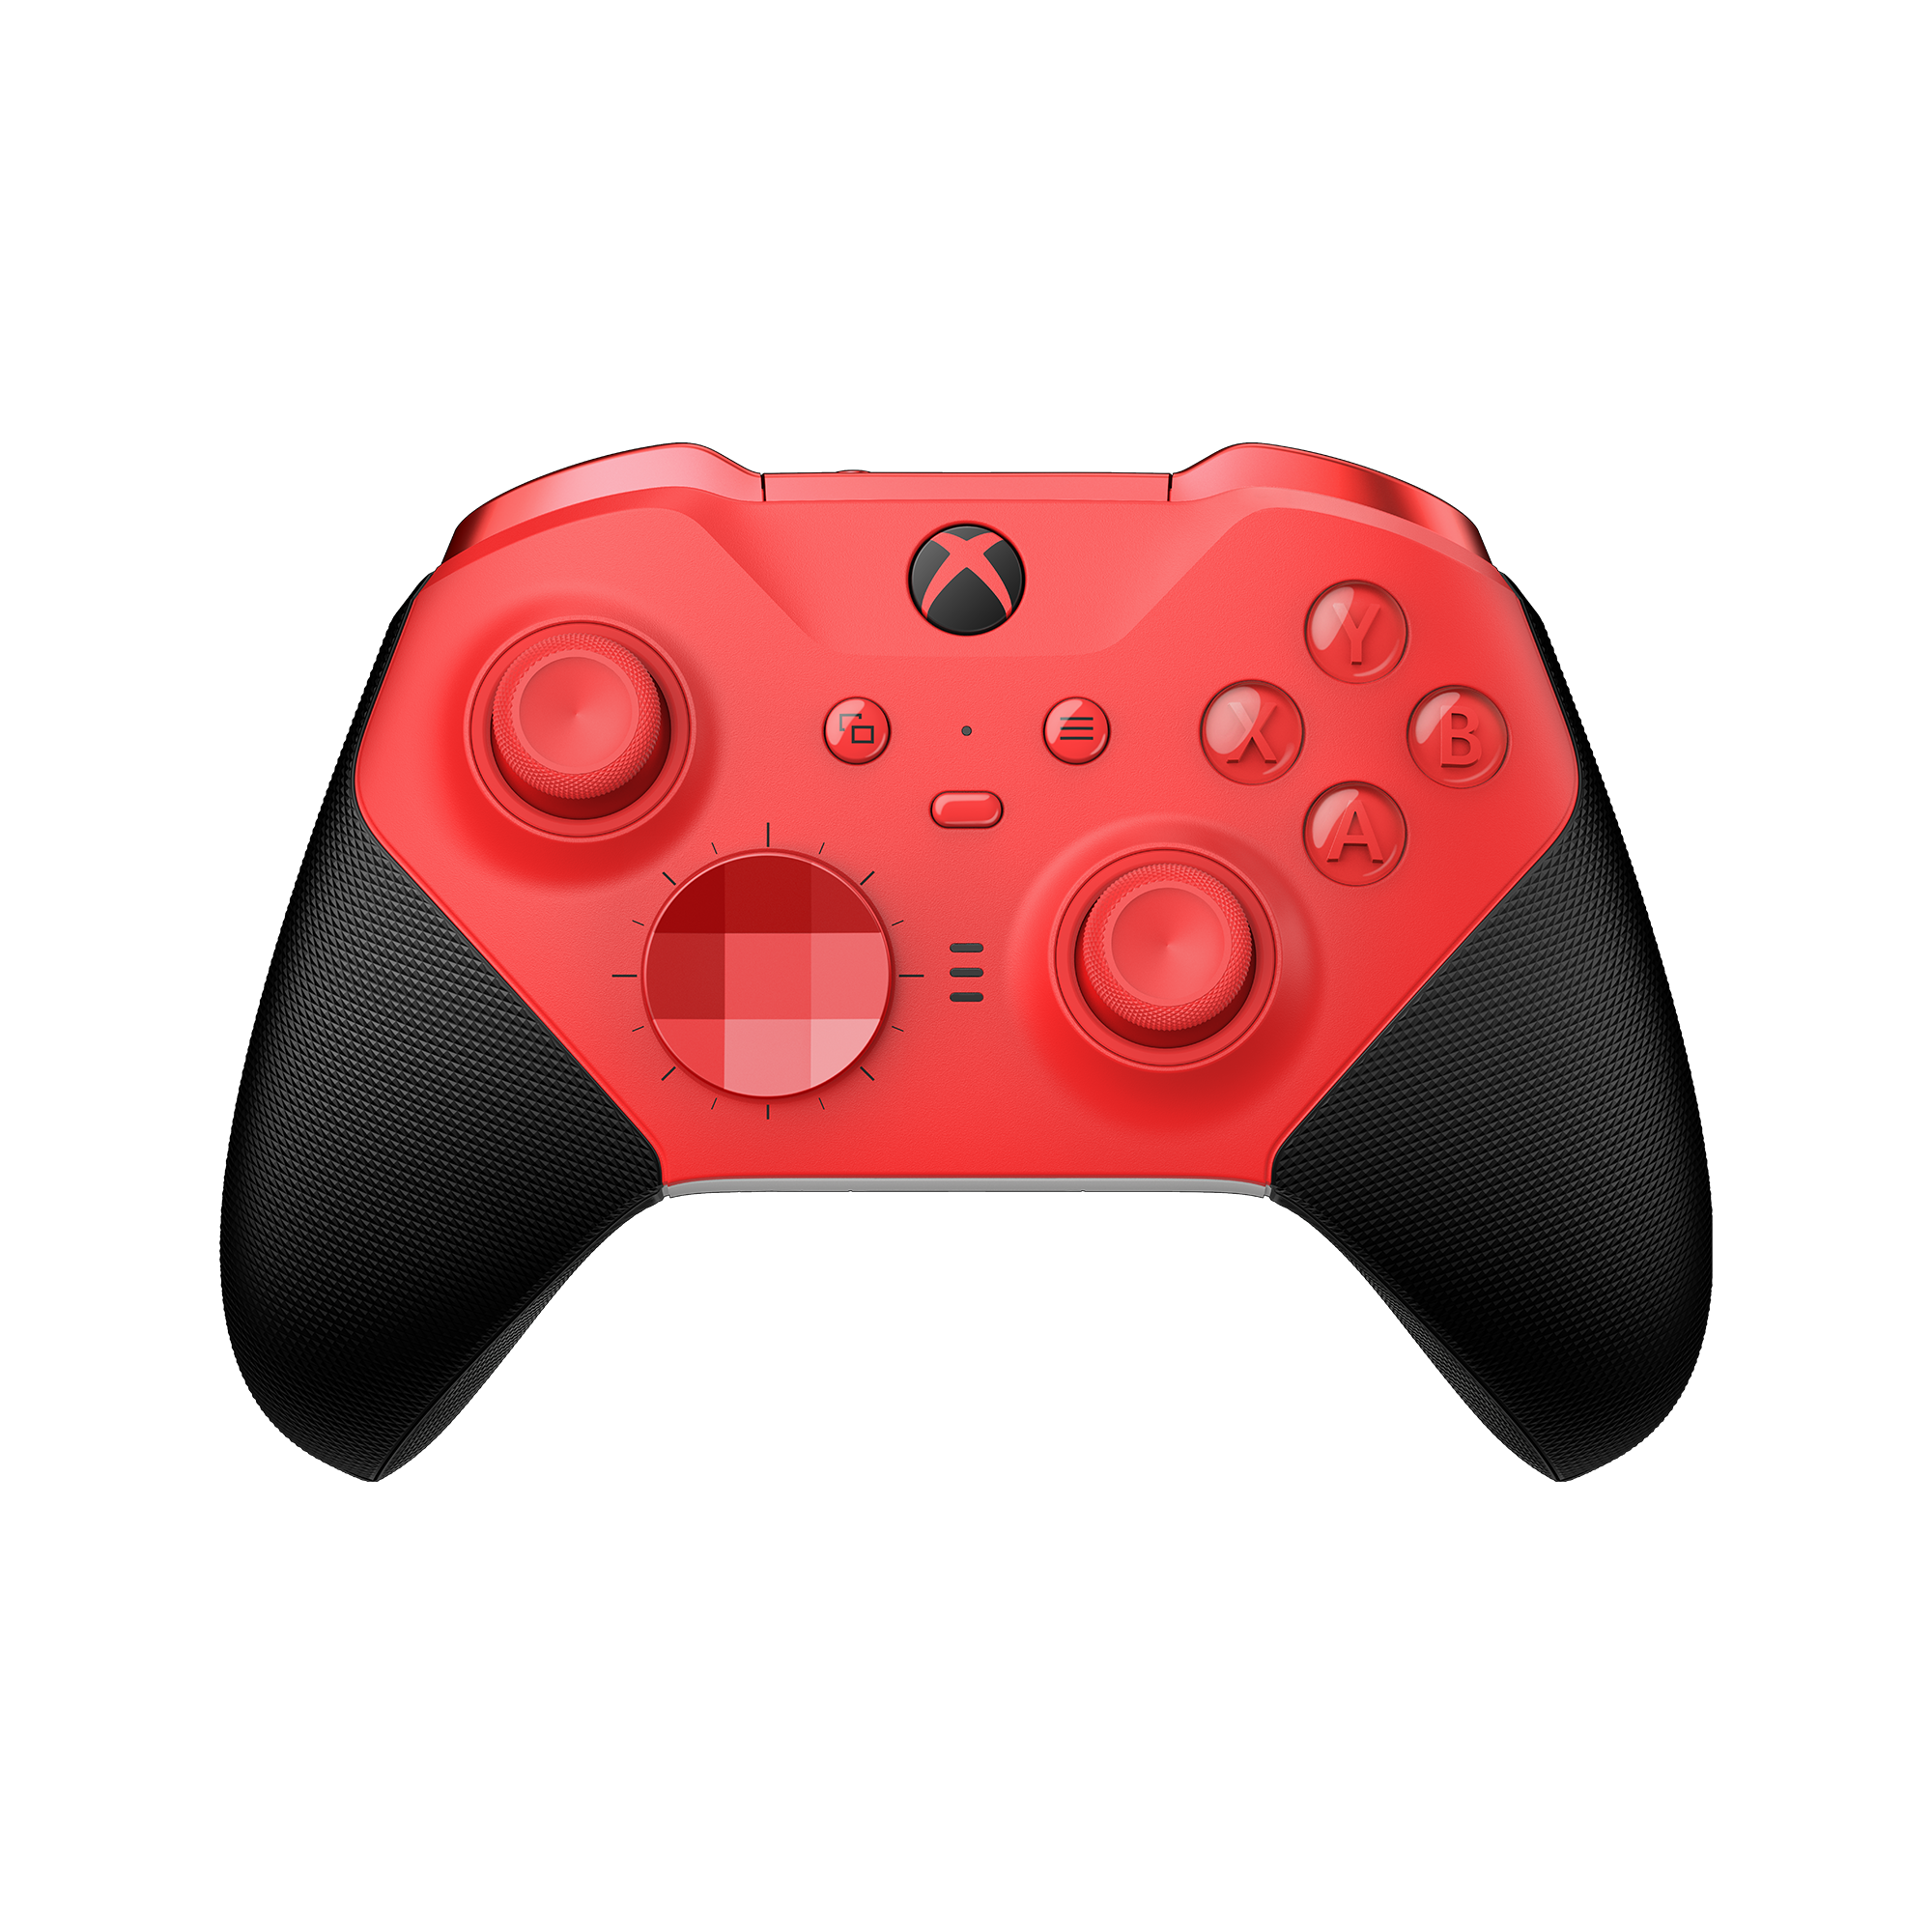 Xbox Elite Wireless Controller Series 2 - Core Edition (Red)